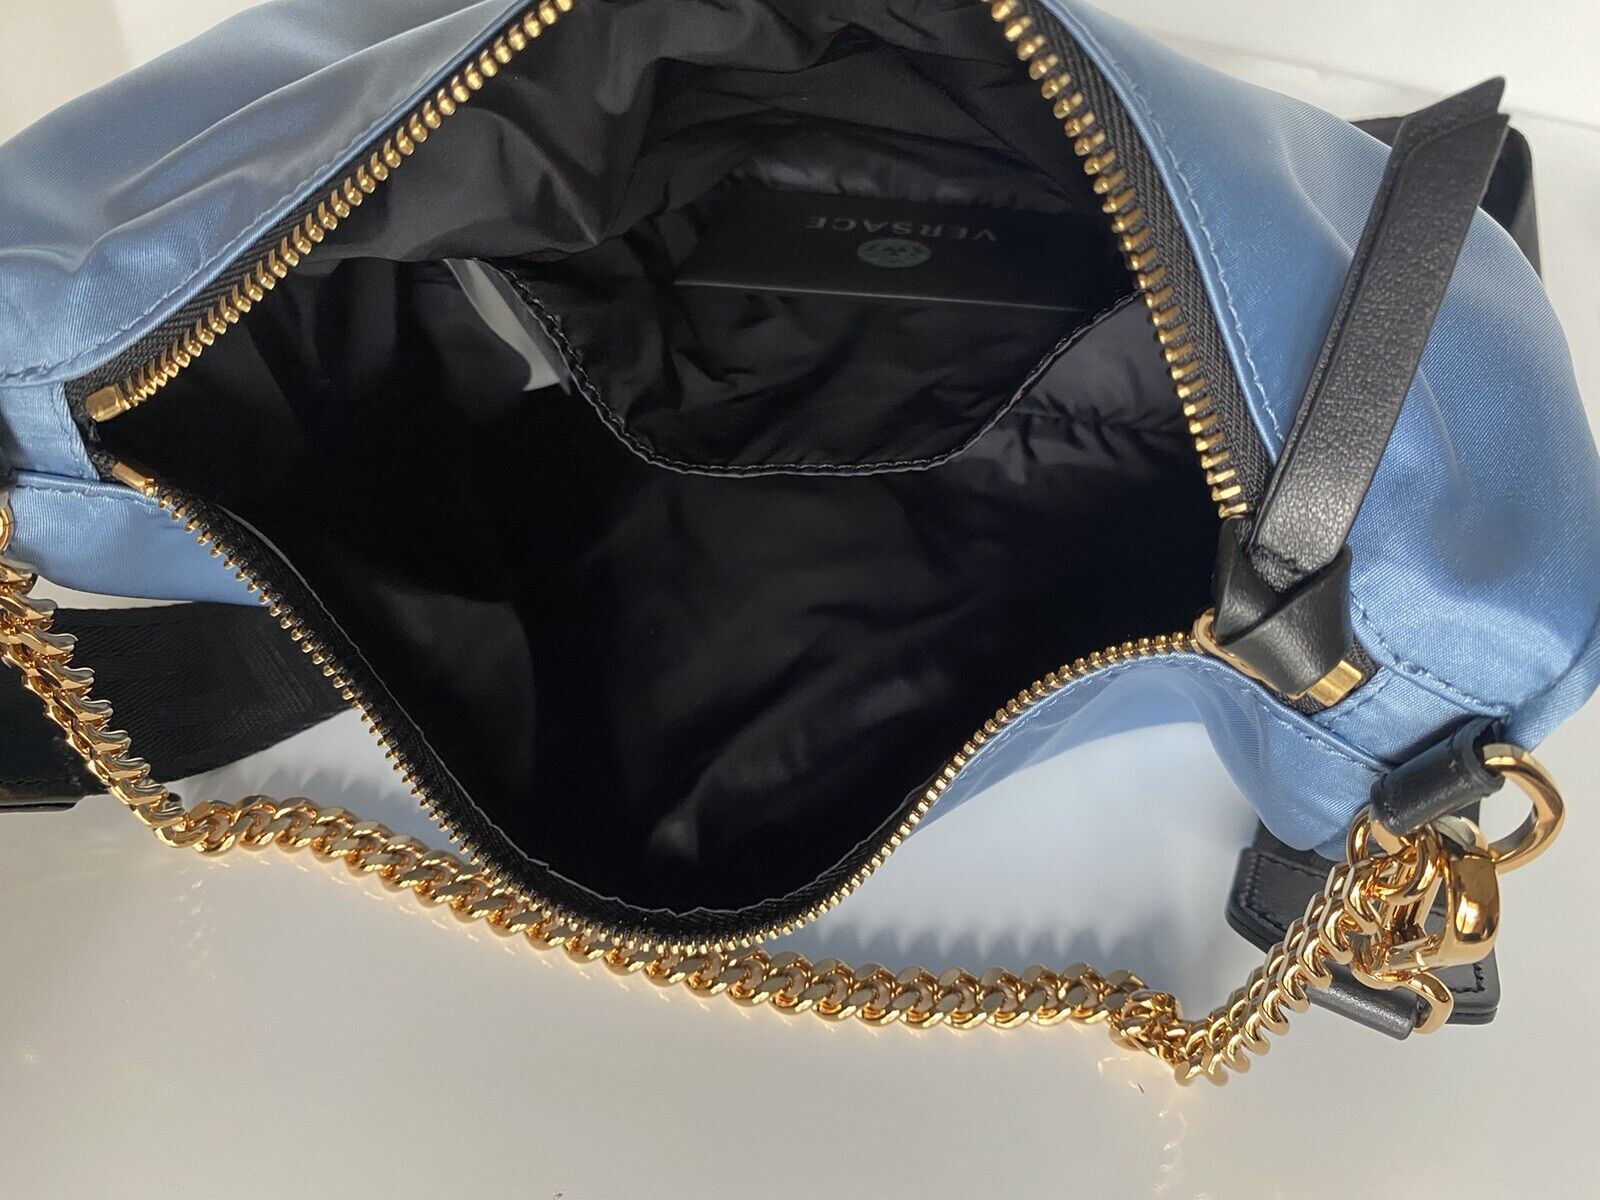 Сумка-хобо NWT Versace из нейлона/кожи василькового цвета, производство Италия 1002877 1A02155 